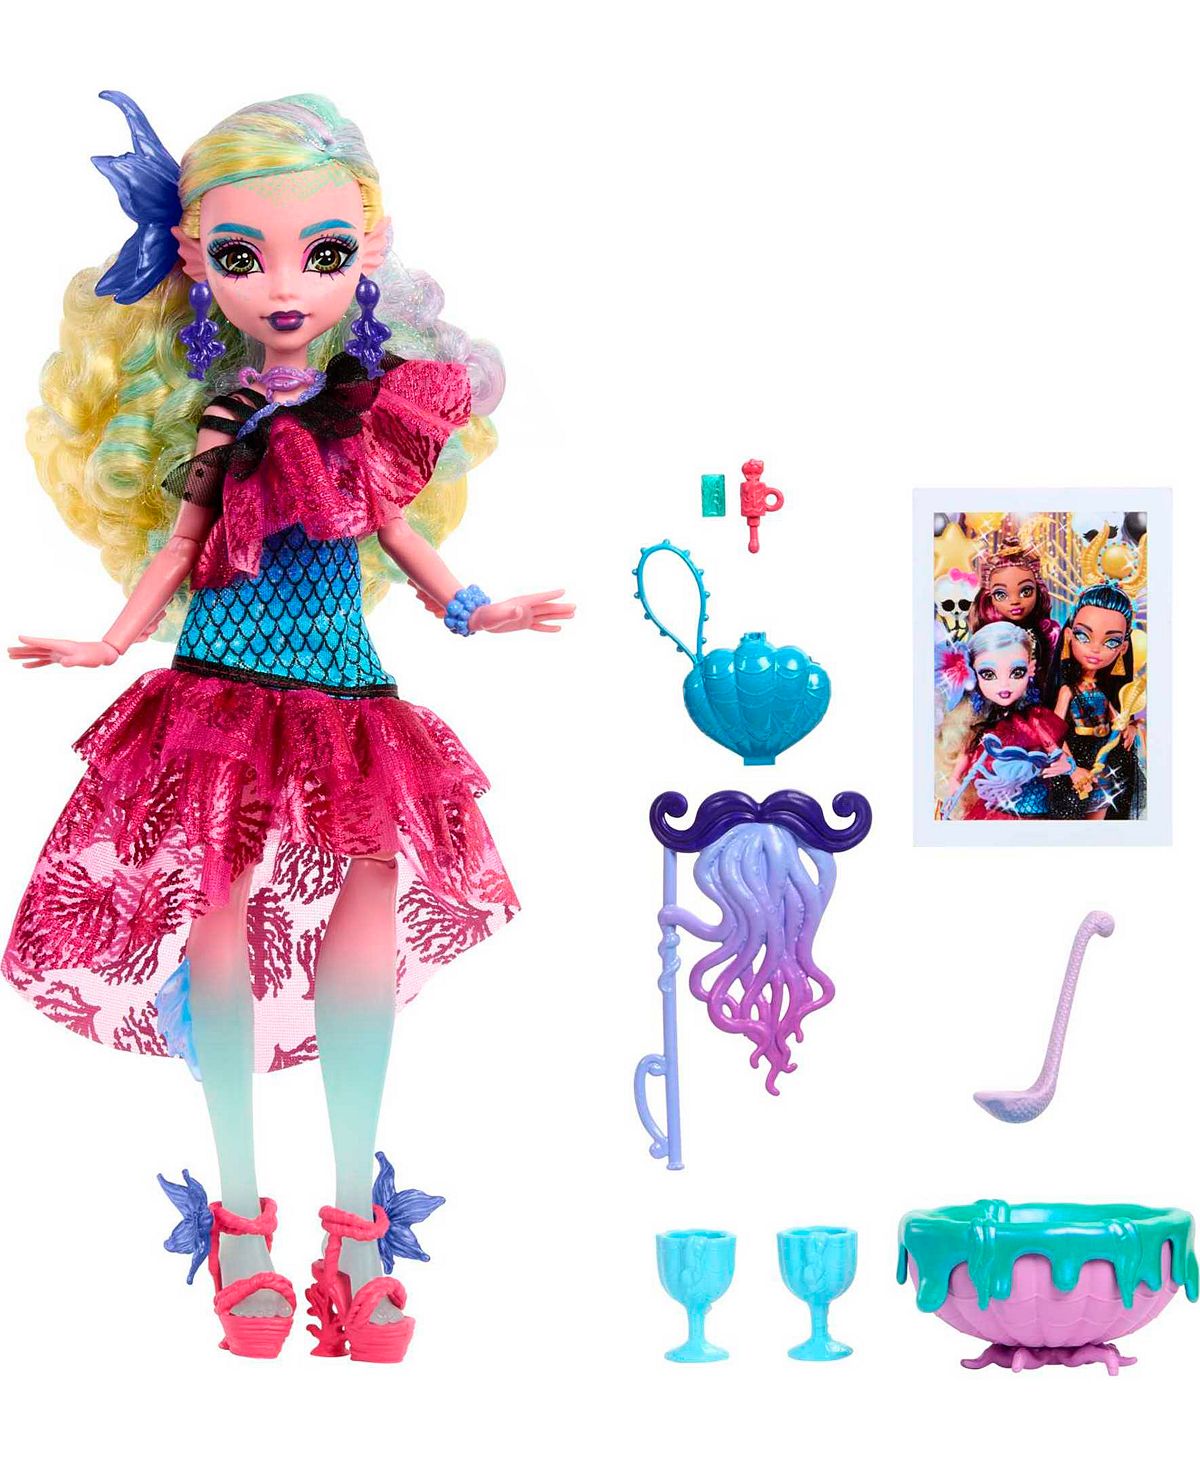 Monster High - Lagoona Blue Doll in Glam Monster Ball Party Dress